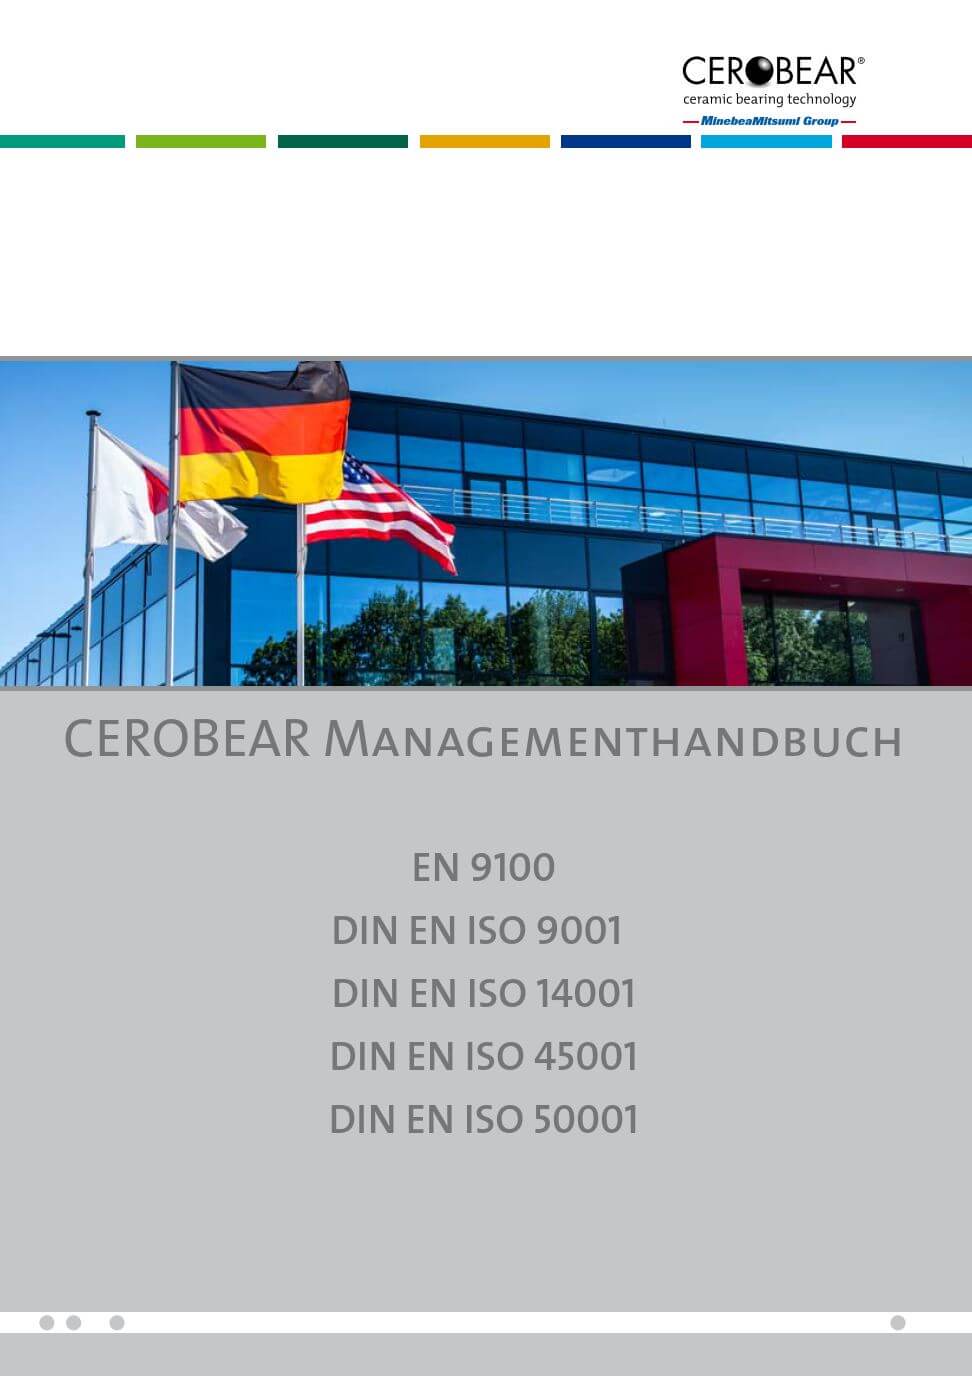 Managementhandbuch Nov 2020